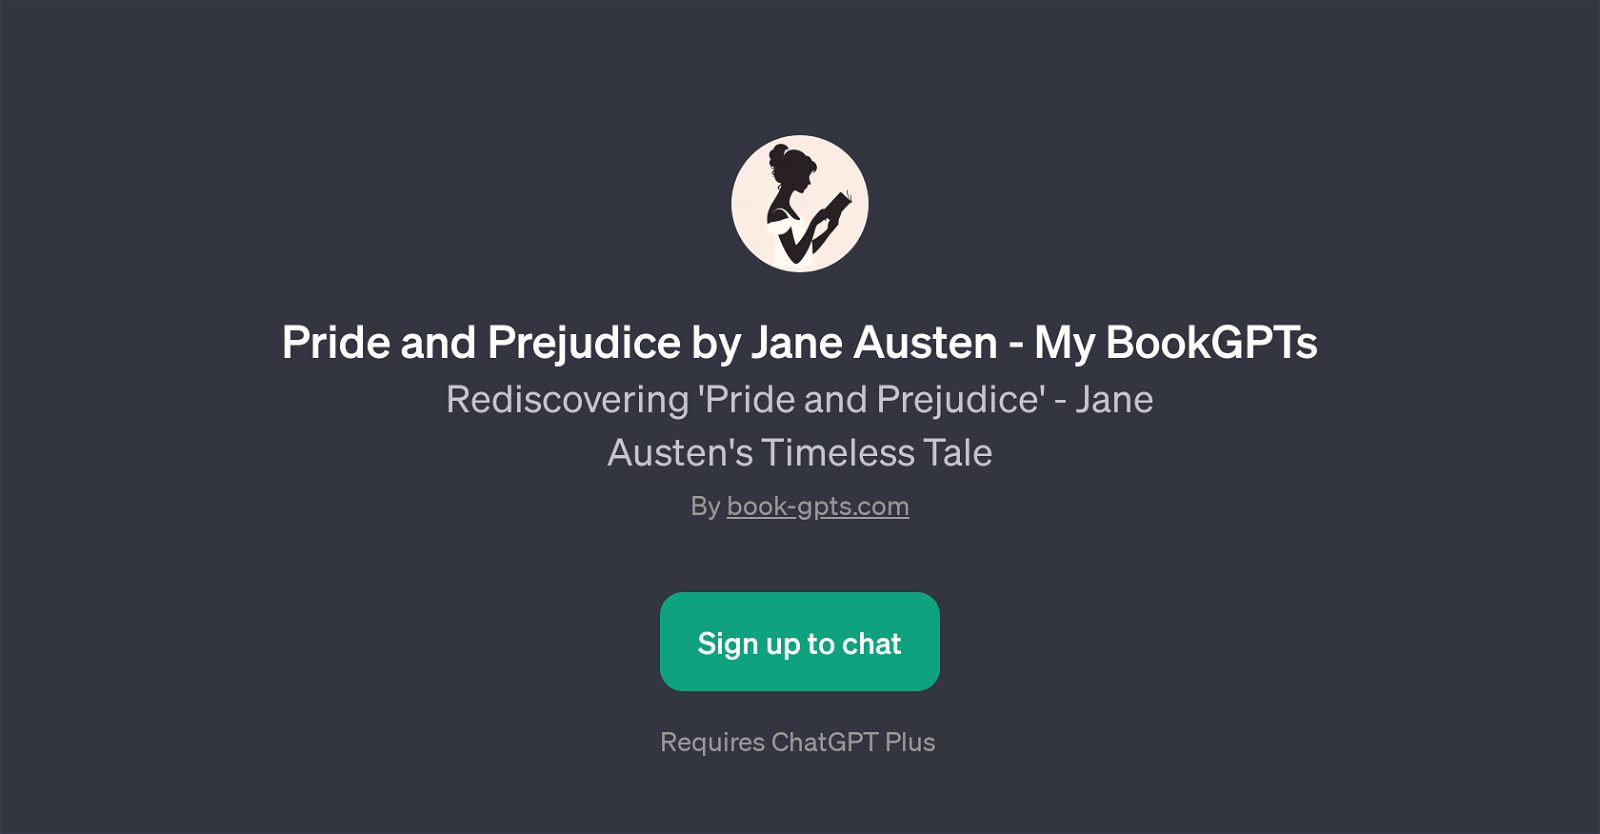 My BookGPTs - Pride and Prejudice by Jane Austen website